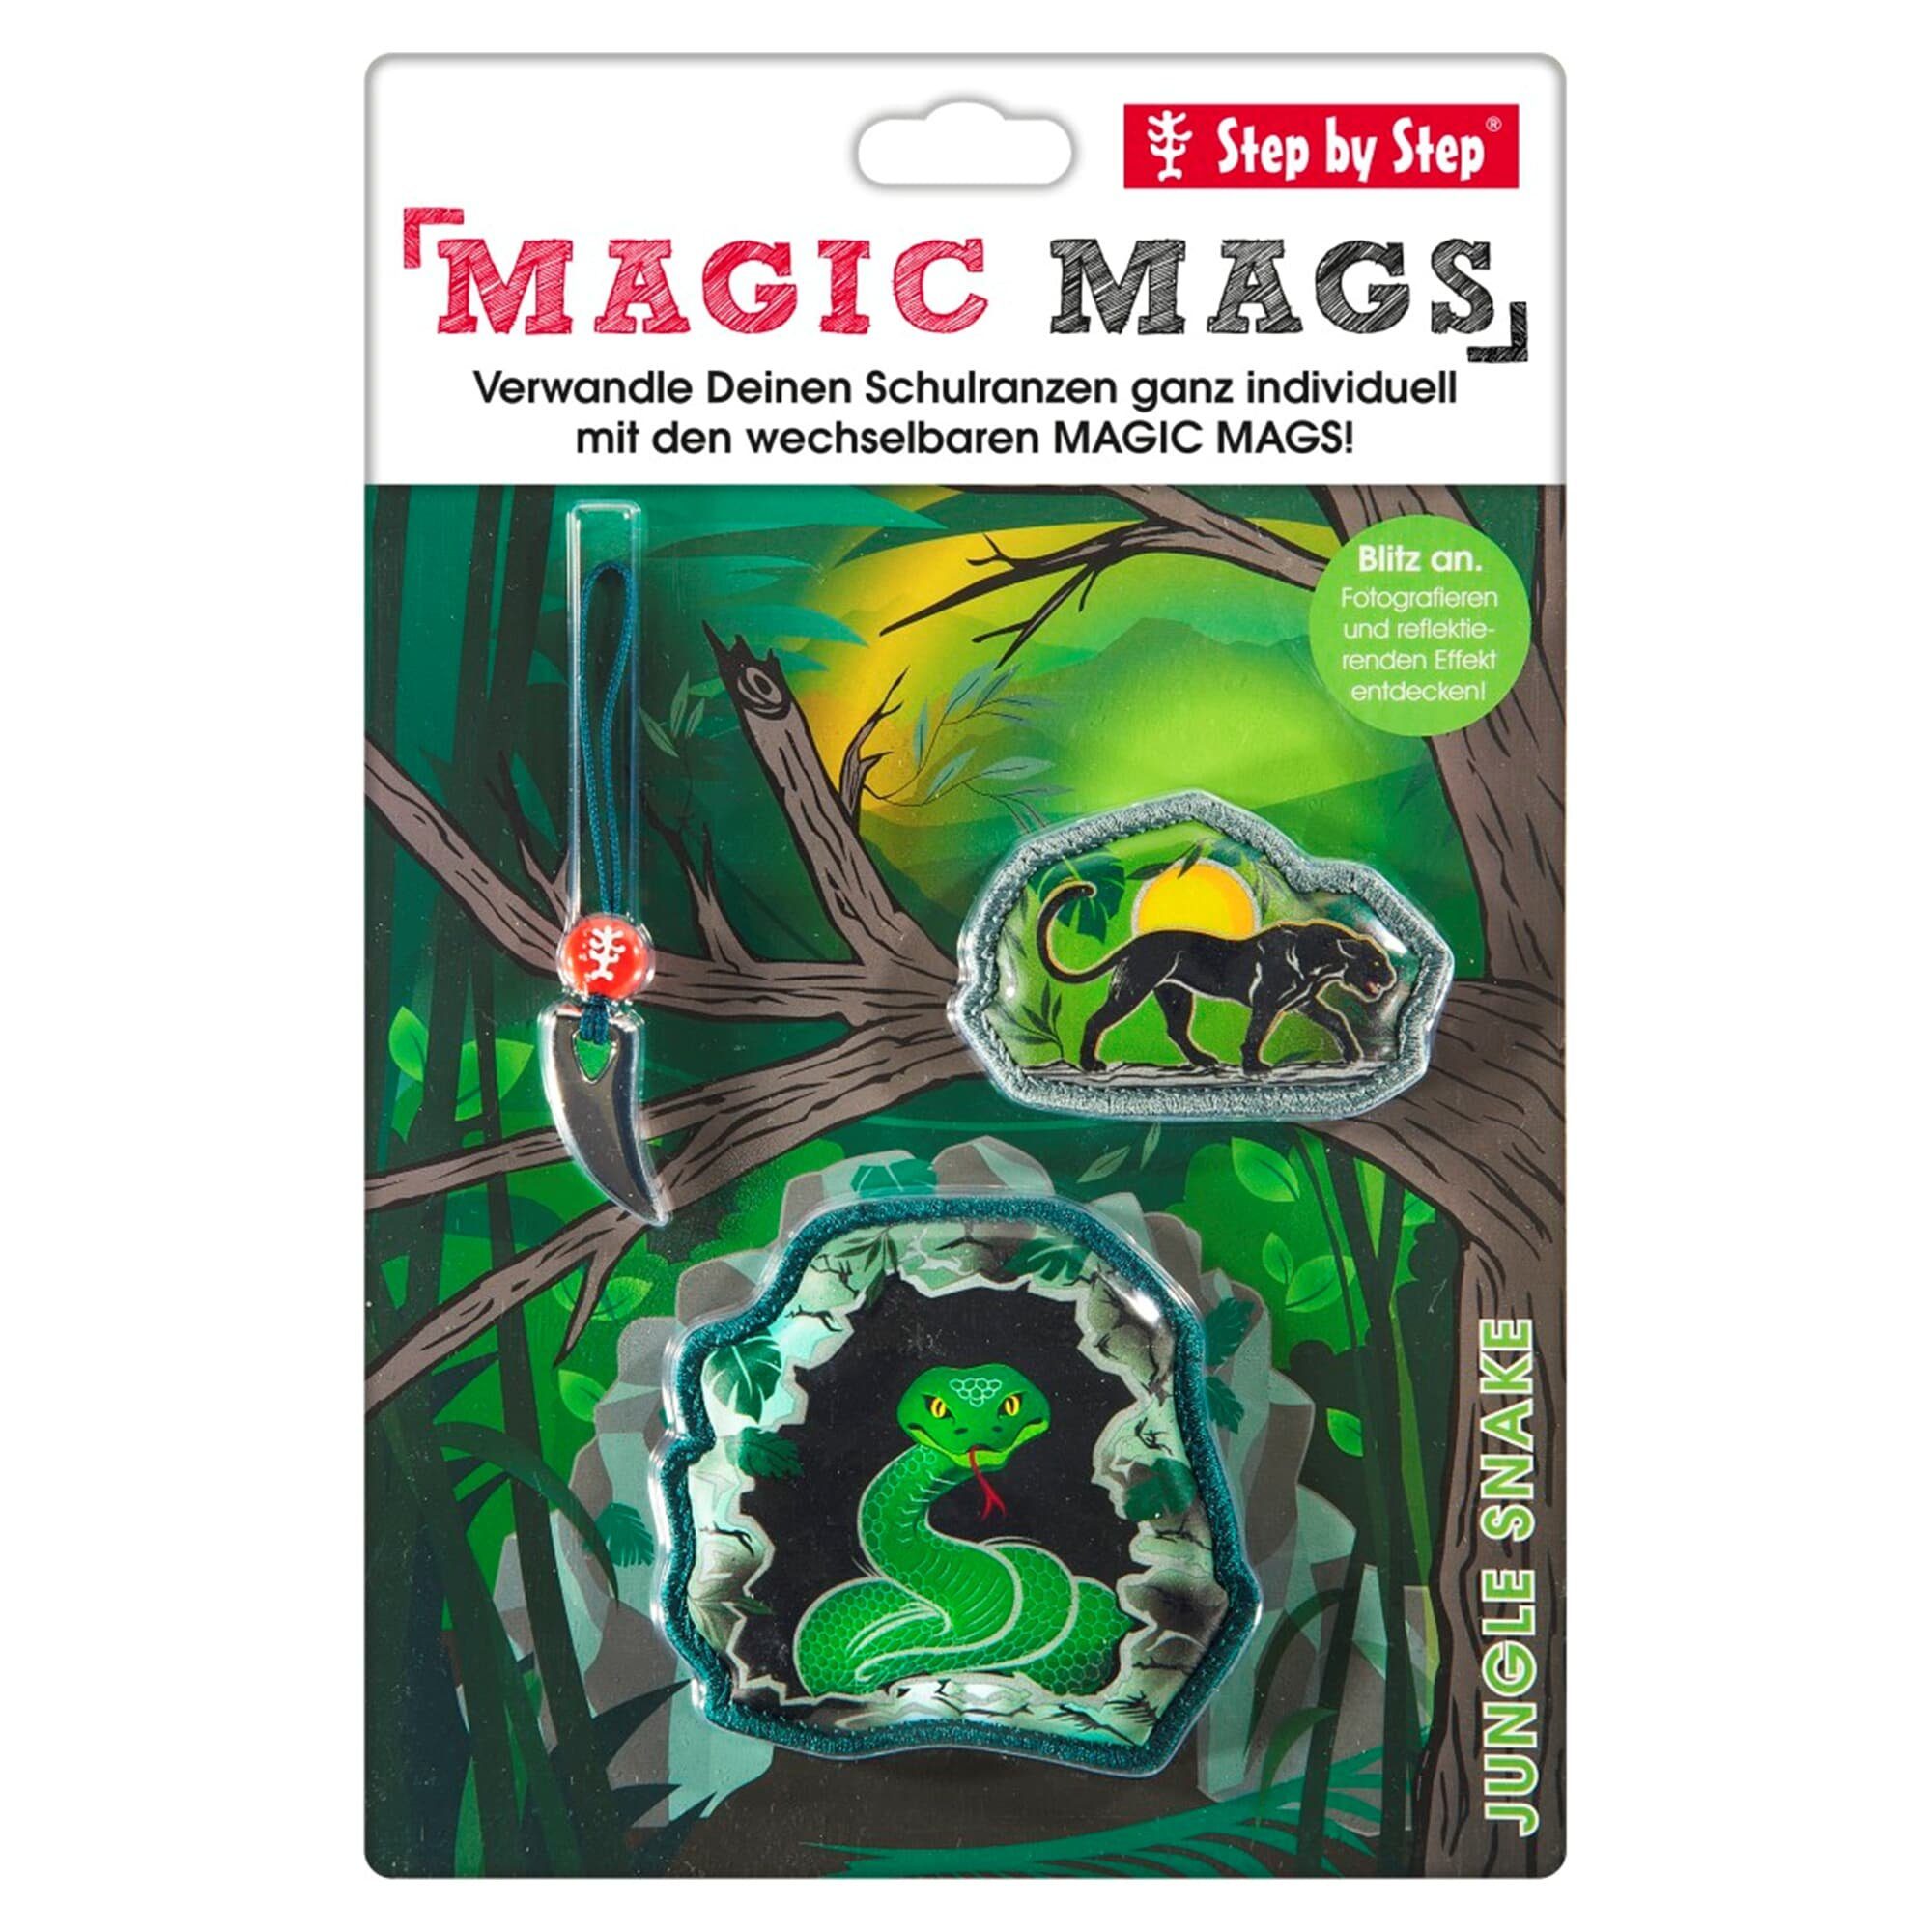 by Step Schulranzen Naga MAGS Jungle Step Snake MAGIC